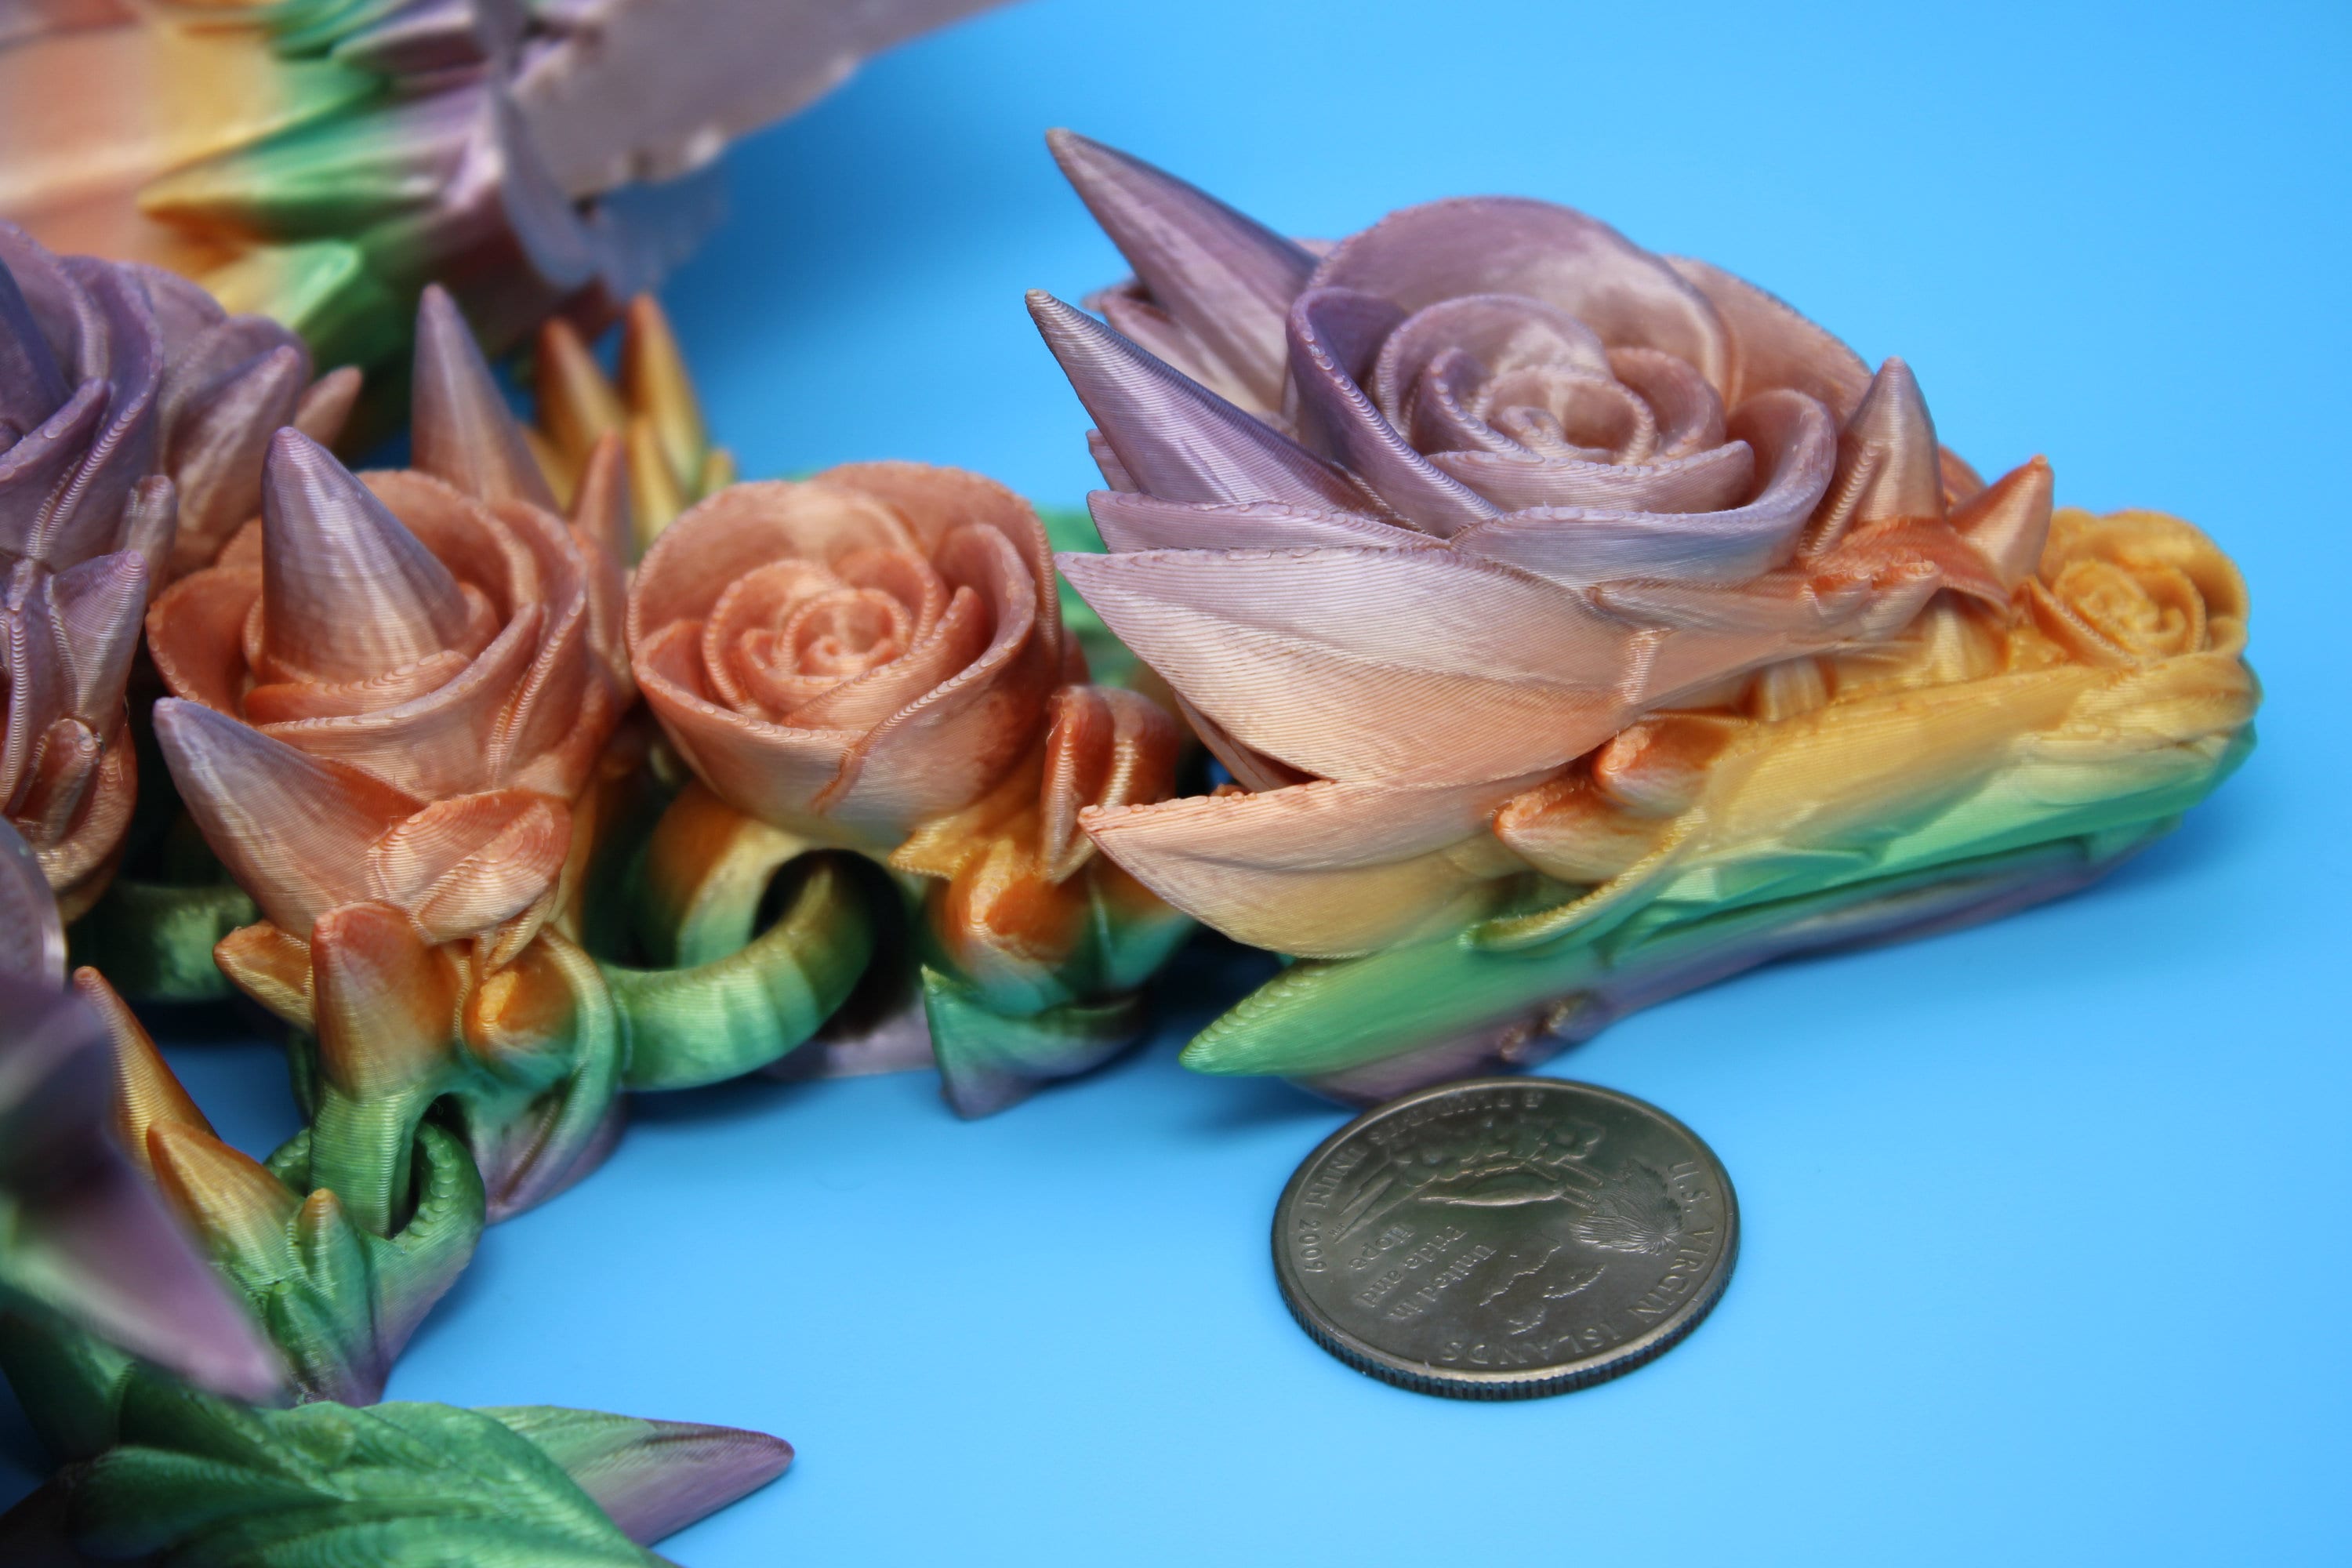 Rose Wing Dragon- Rainbow | Articulating Dragon | 3D Printed Fidget | 19 in.